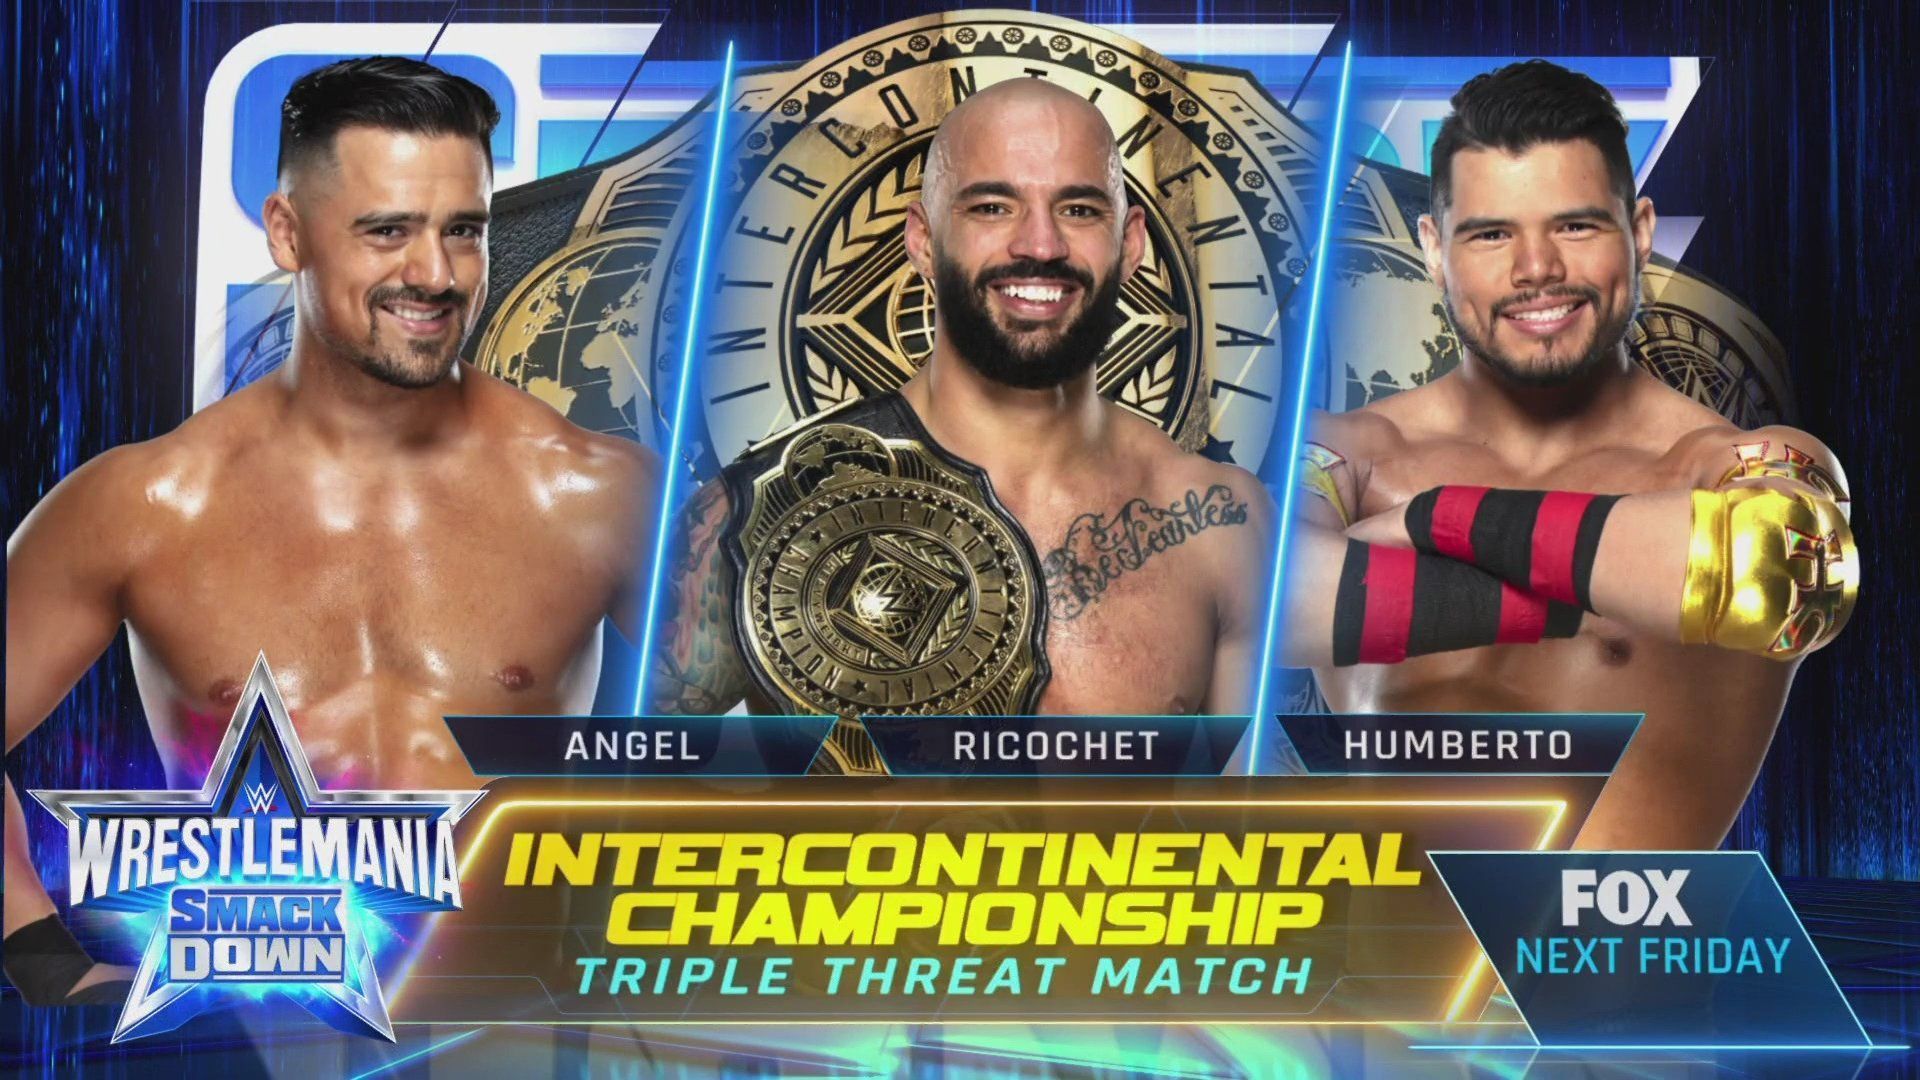 Ricochet will be defending his Intercontinental Championship at WrestleMania SmackDown.